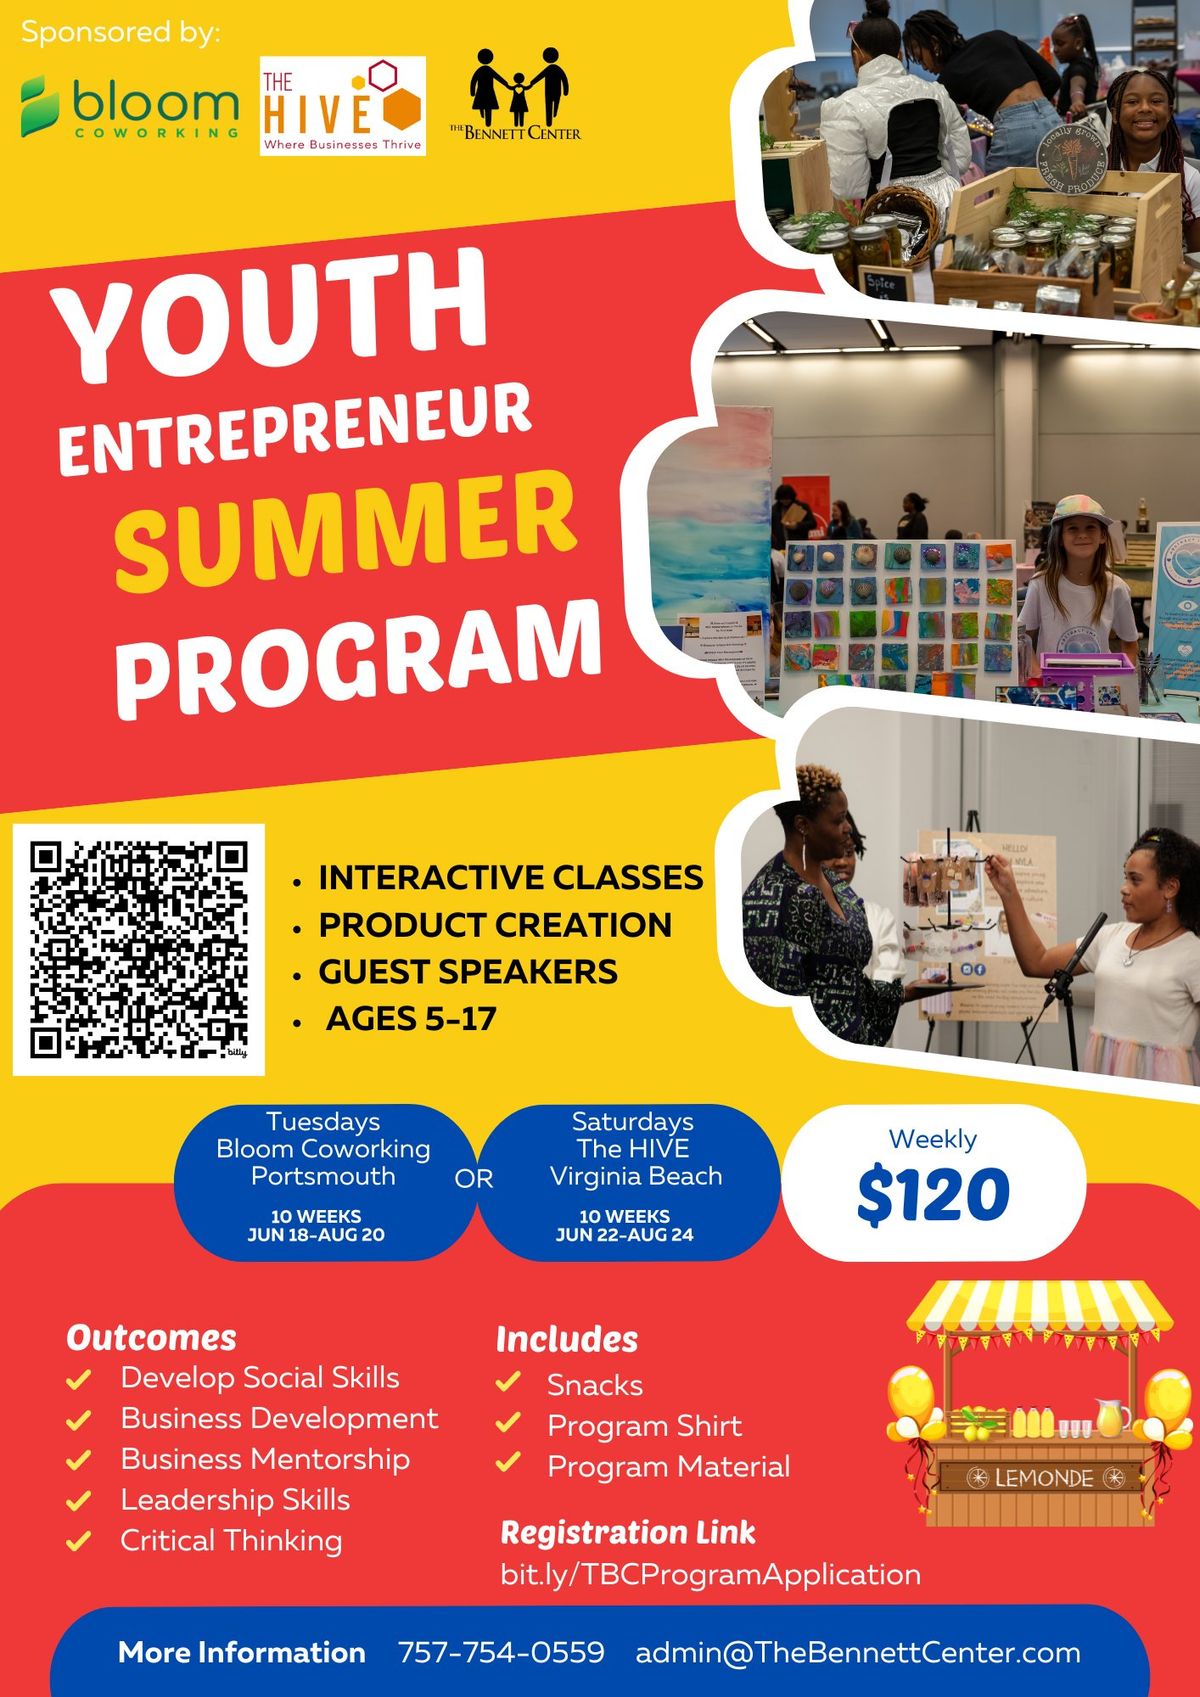 Youth Enrepreneur Summer Program